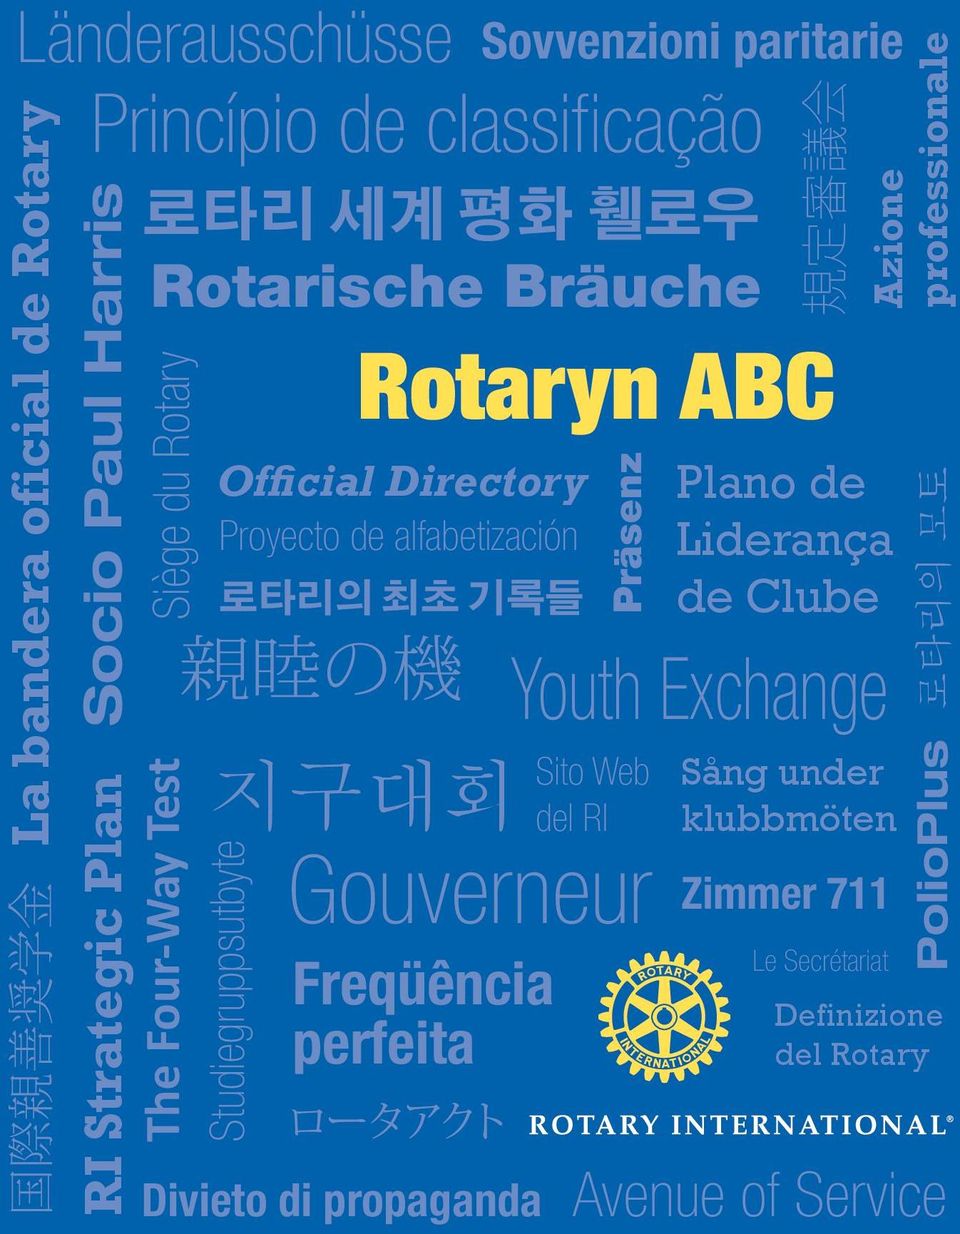 Rotarische Bräuche Official Directory Proyecto de alfabetización 로타리의 최초 기록들 親 睦 の 機 지구대회 Präsenz Sito Web del RI Gouverneur ロータアクト 規 定 審 議 会